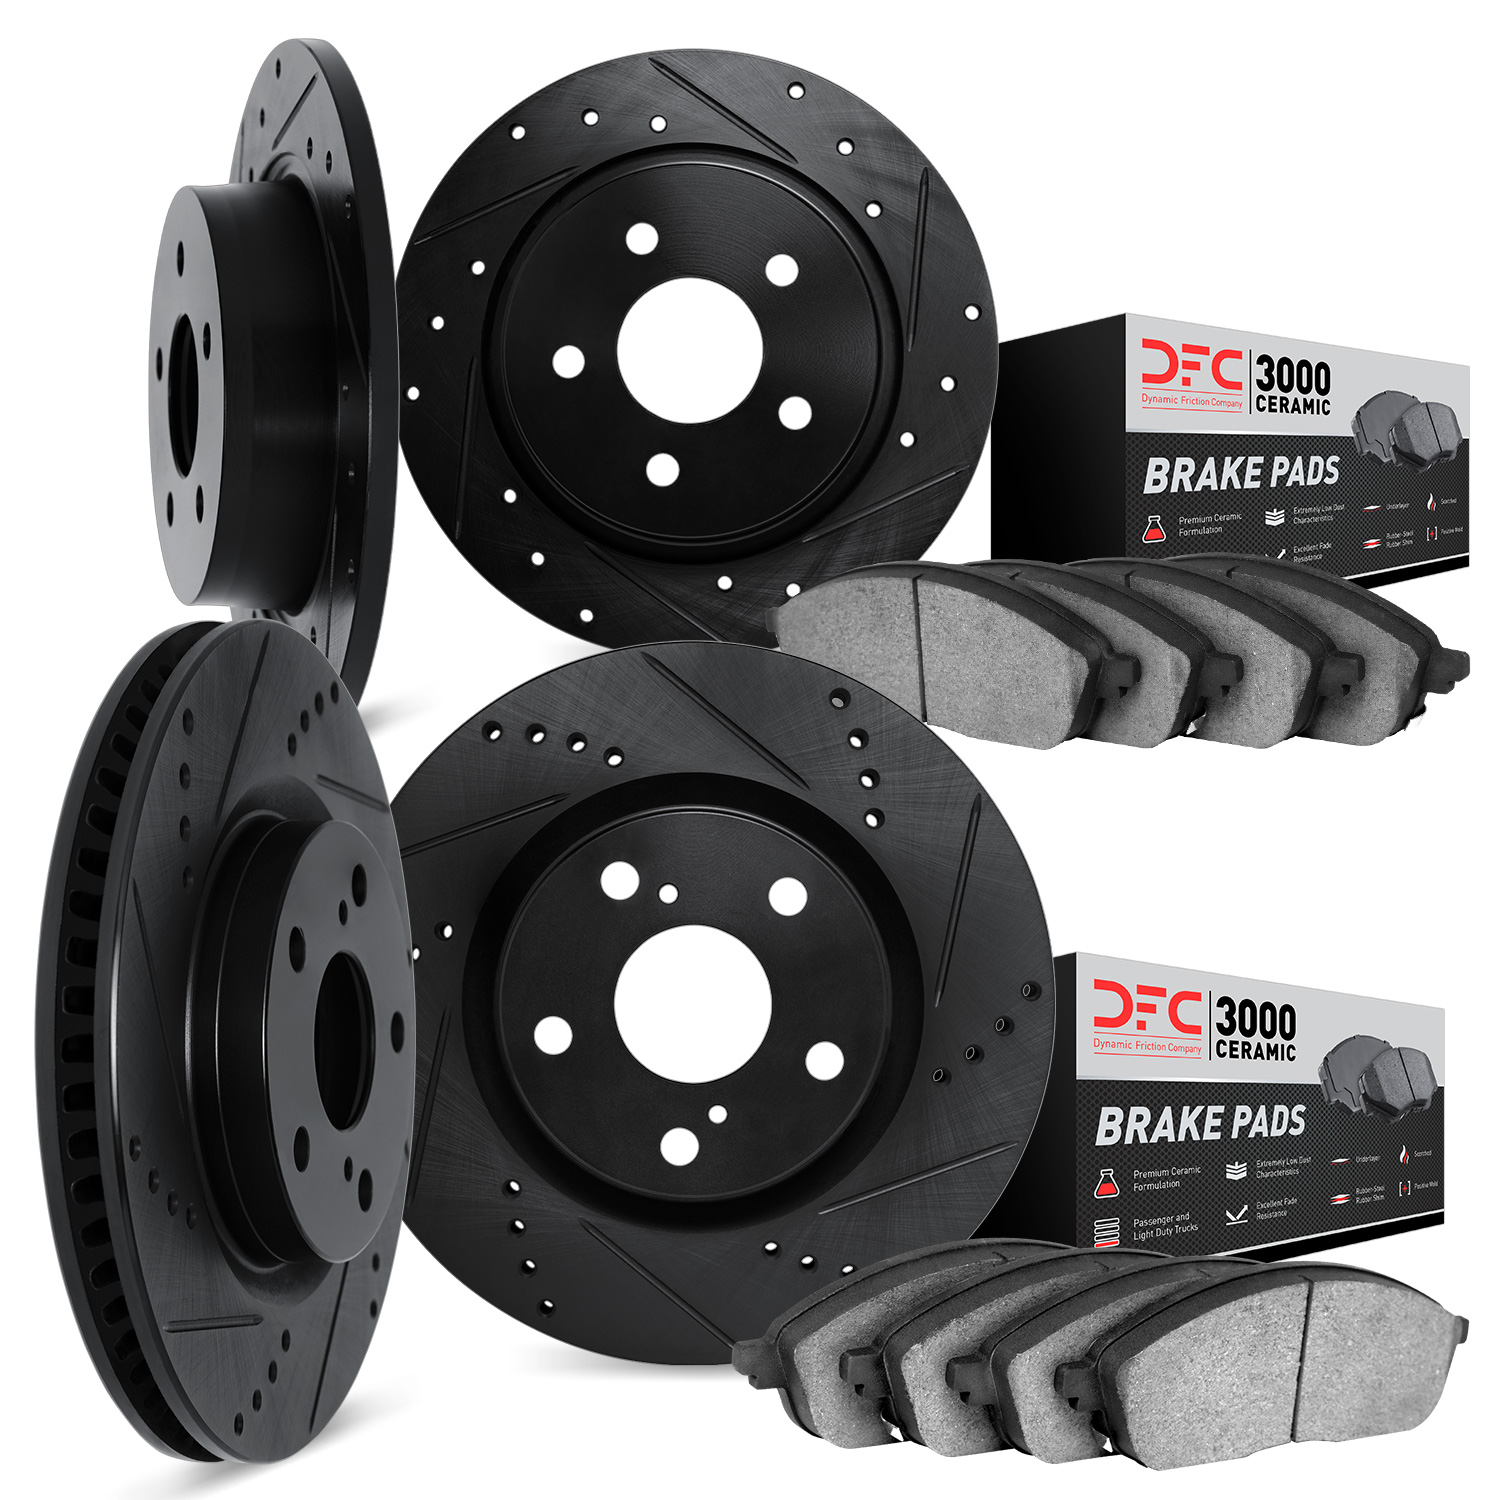 8304-80036 Drilled/Slotted Brake Rotors with 3000-Series Ceramic Brake Pads Kit [Black], 2013-2015 Ford/Lincoln/Mercury/Mazda, P